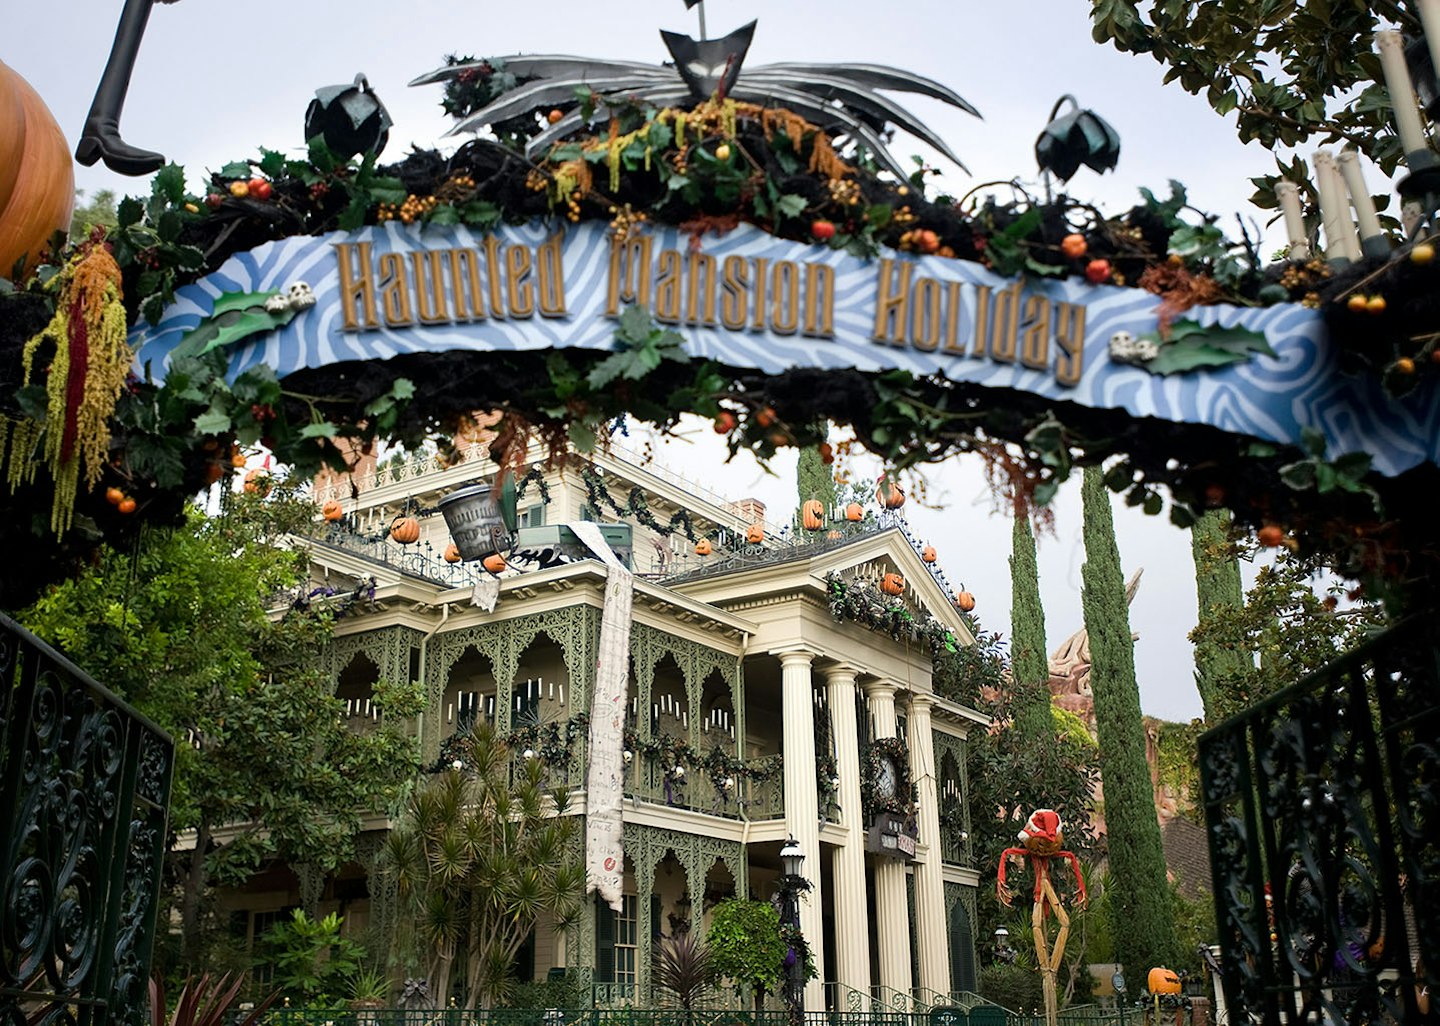 Disney World's Haunted Mansion